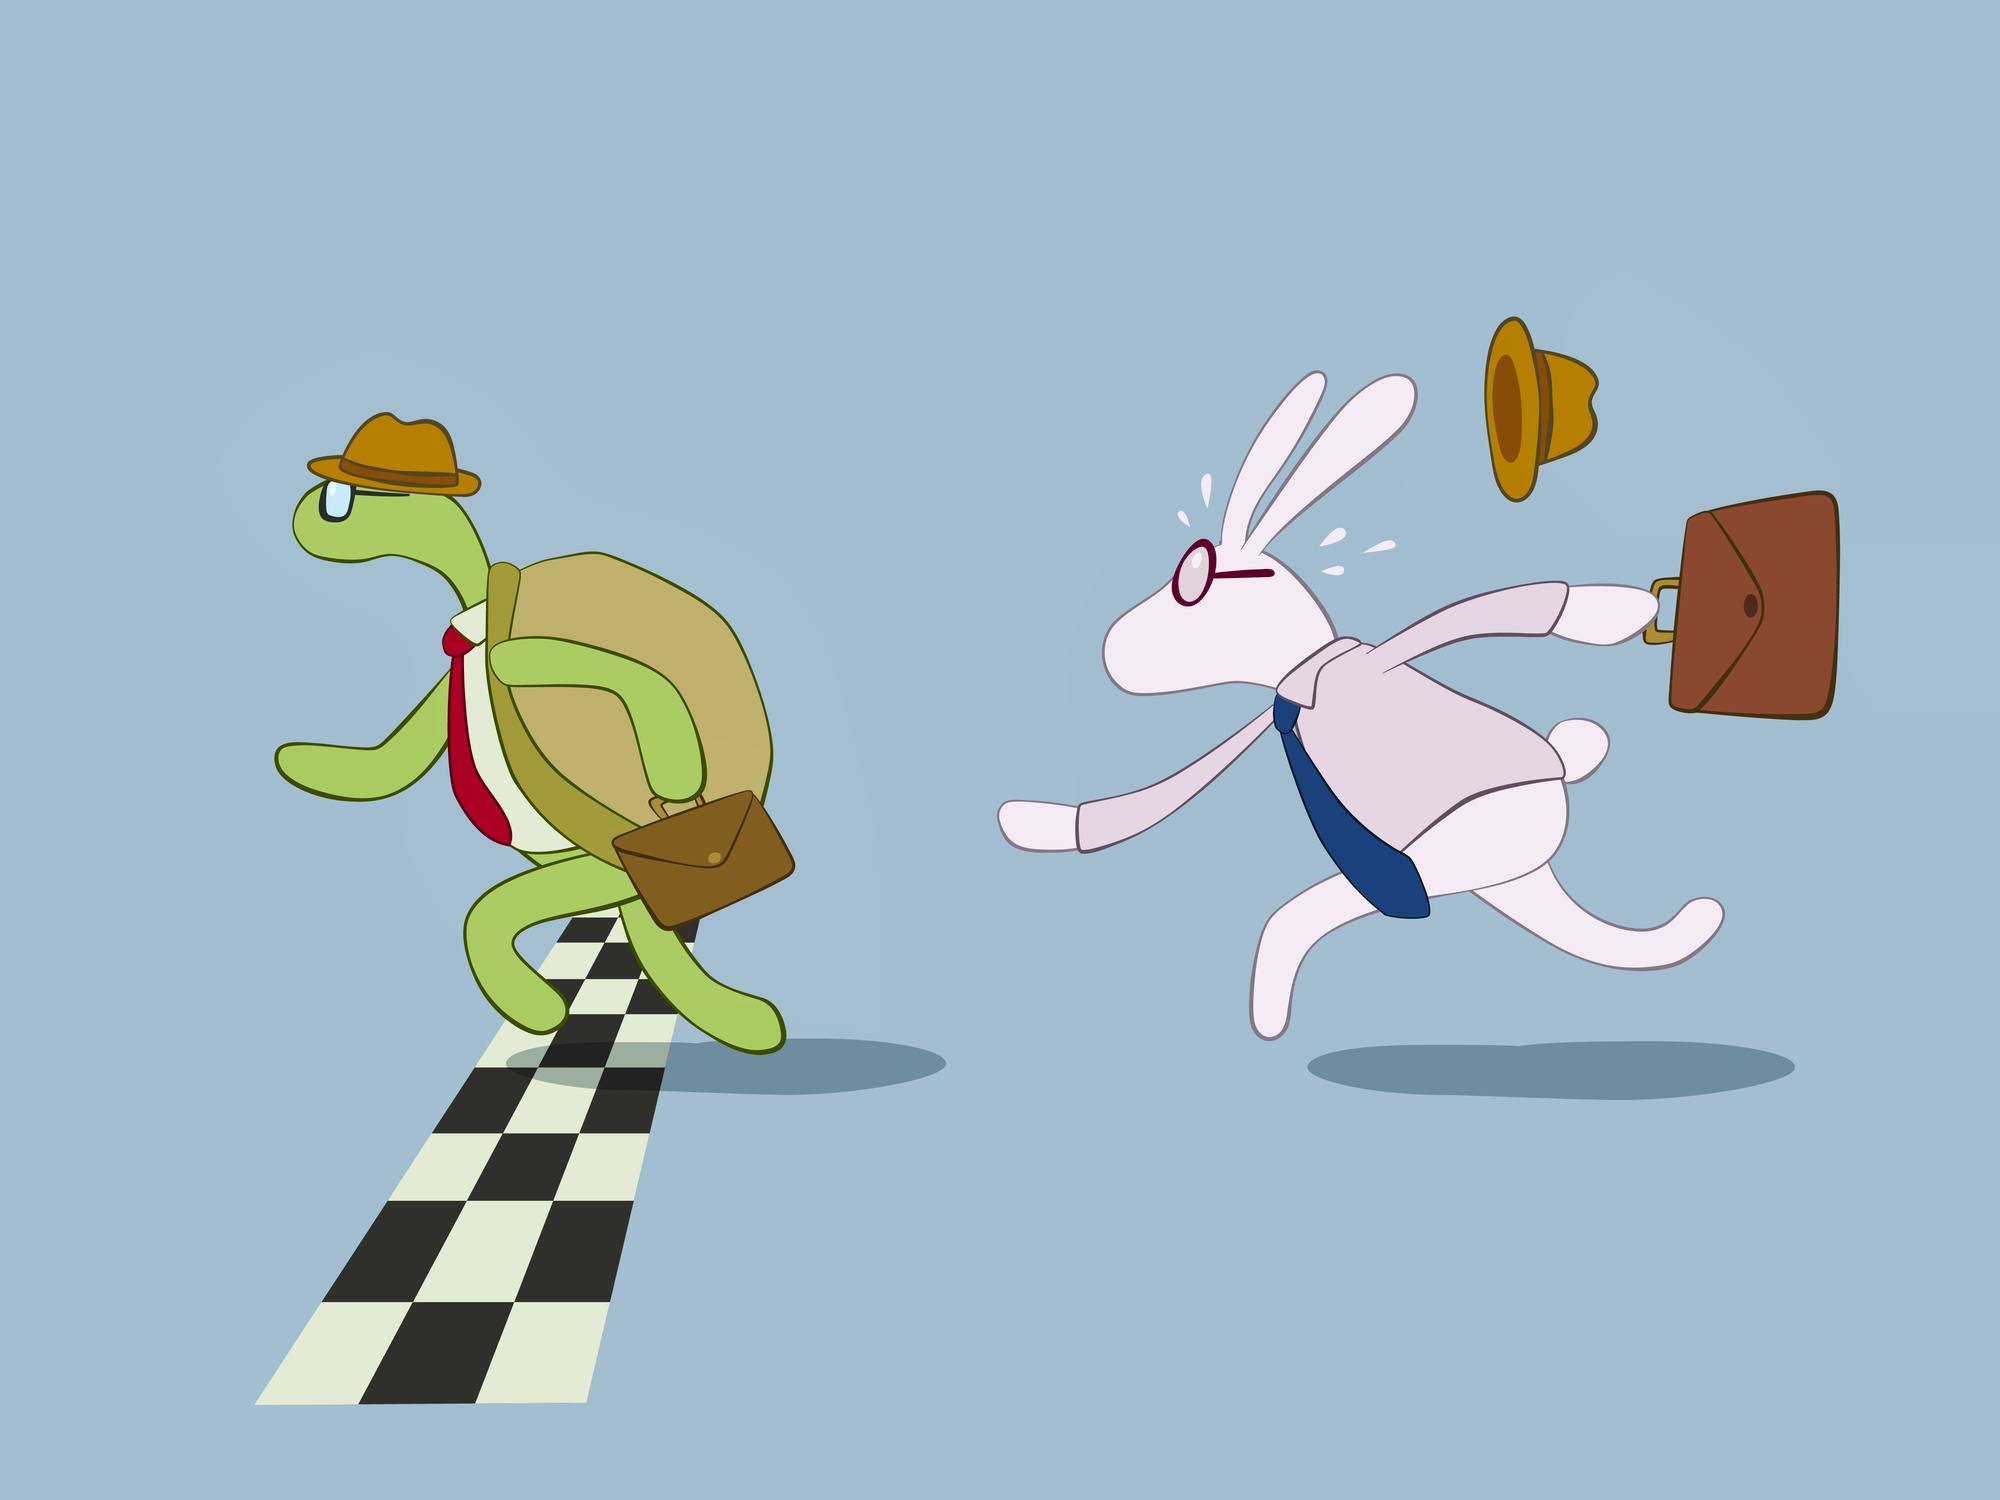 The Tortoise Beats the Hare Again!